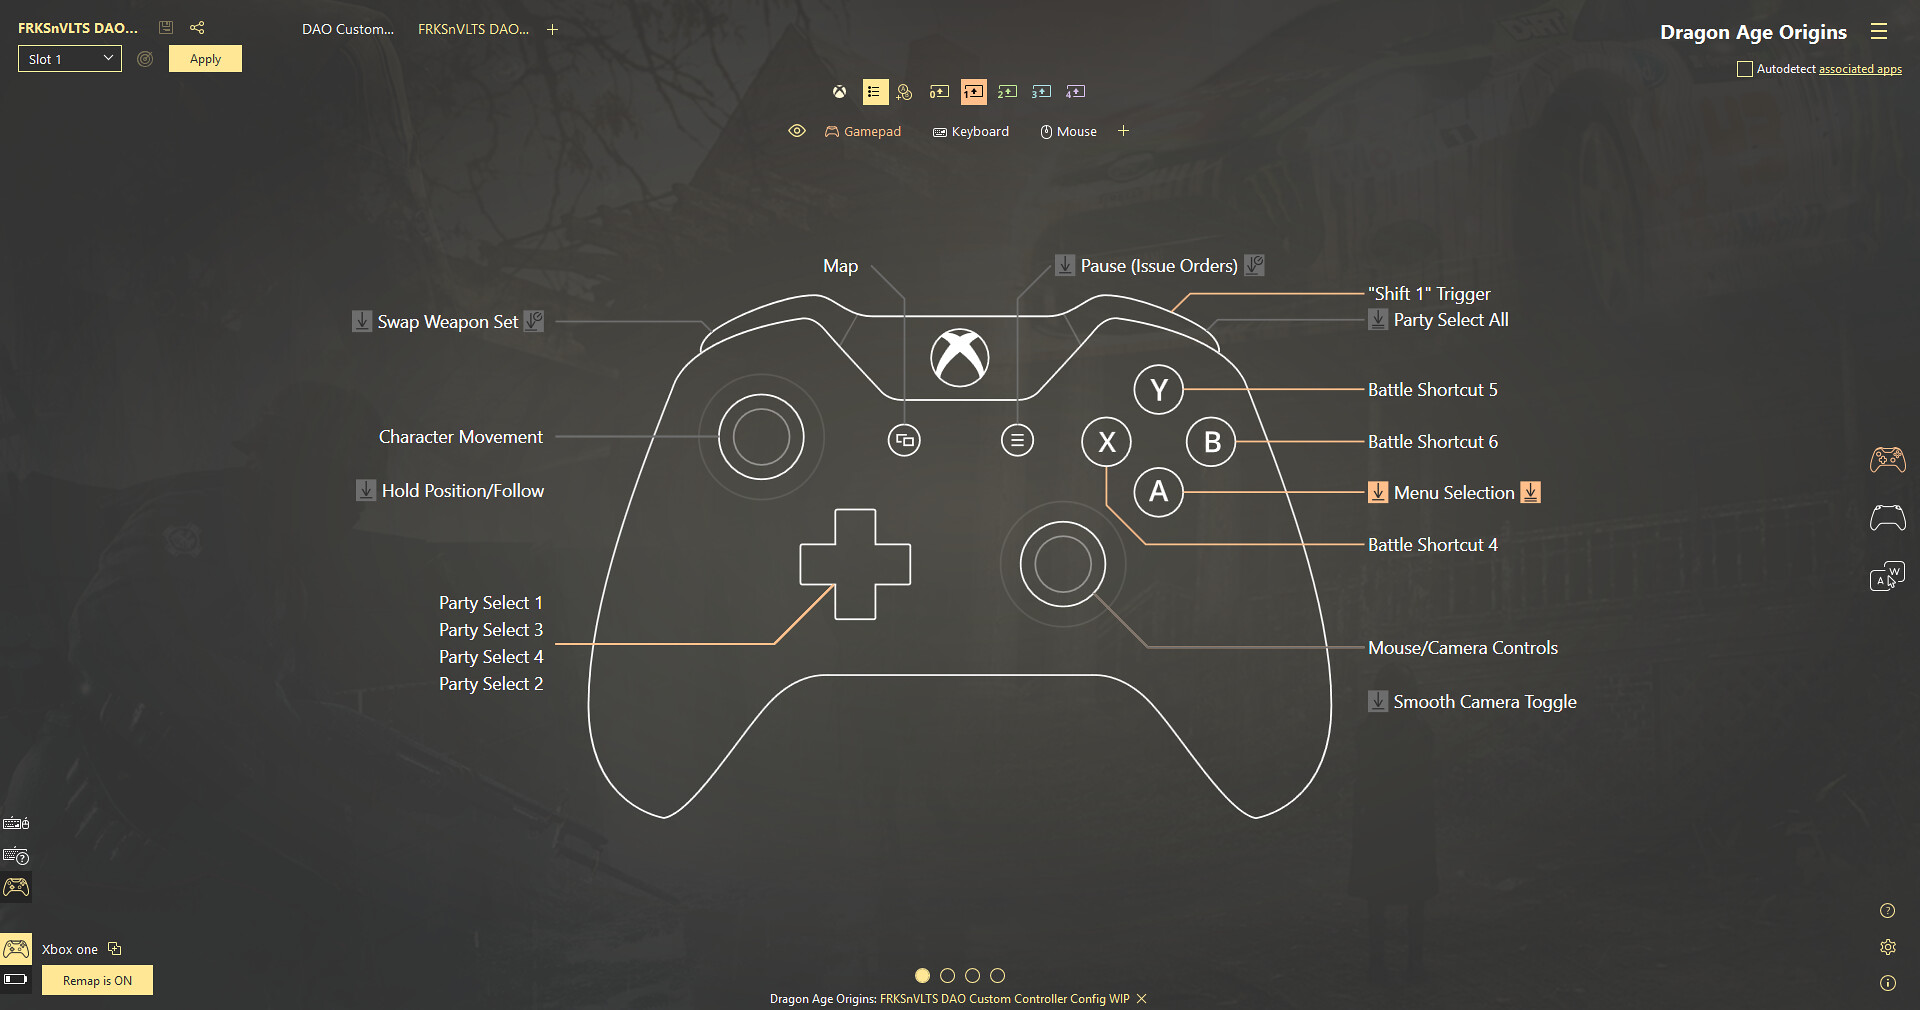 Controller settings on Xbox menu